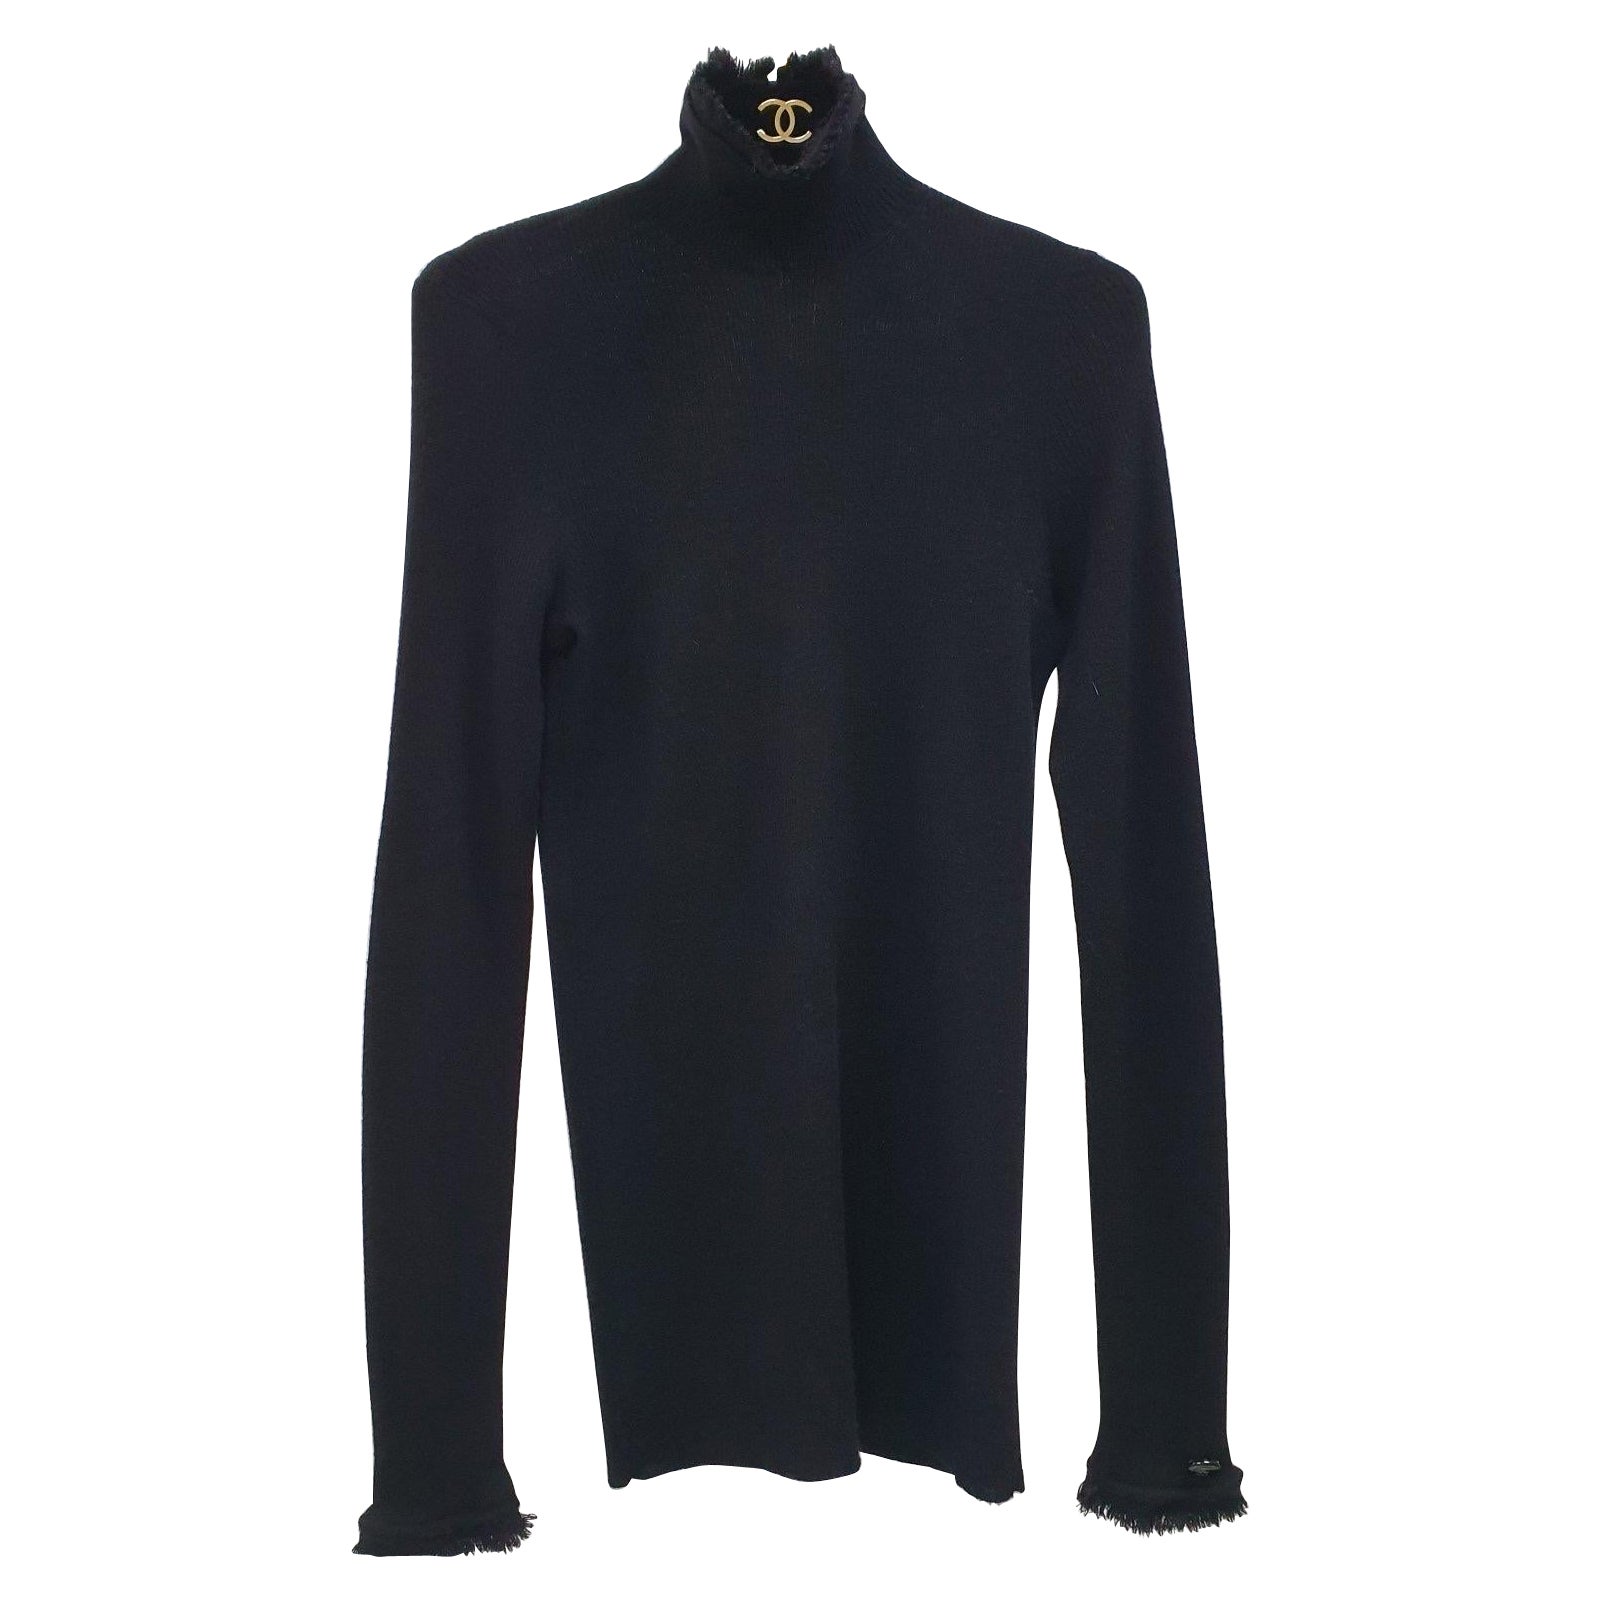 Chanel Black Cashmere Turtleneck Sweater Sz.38 For Sale